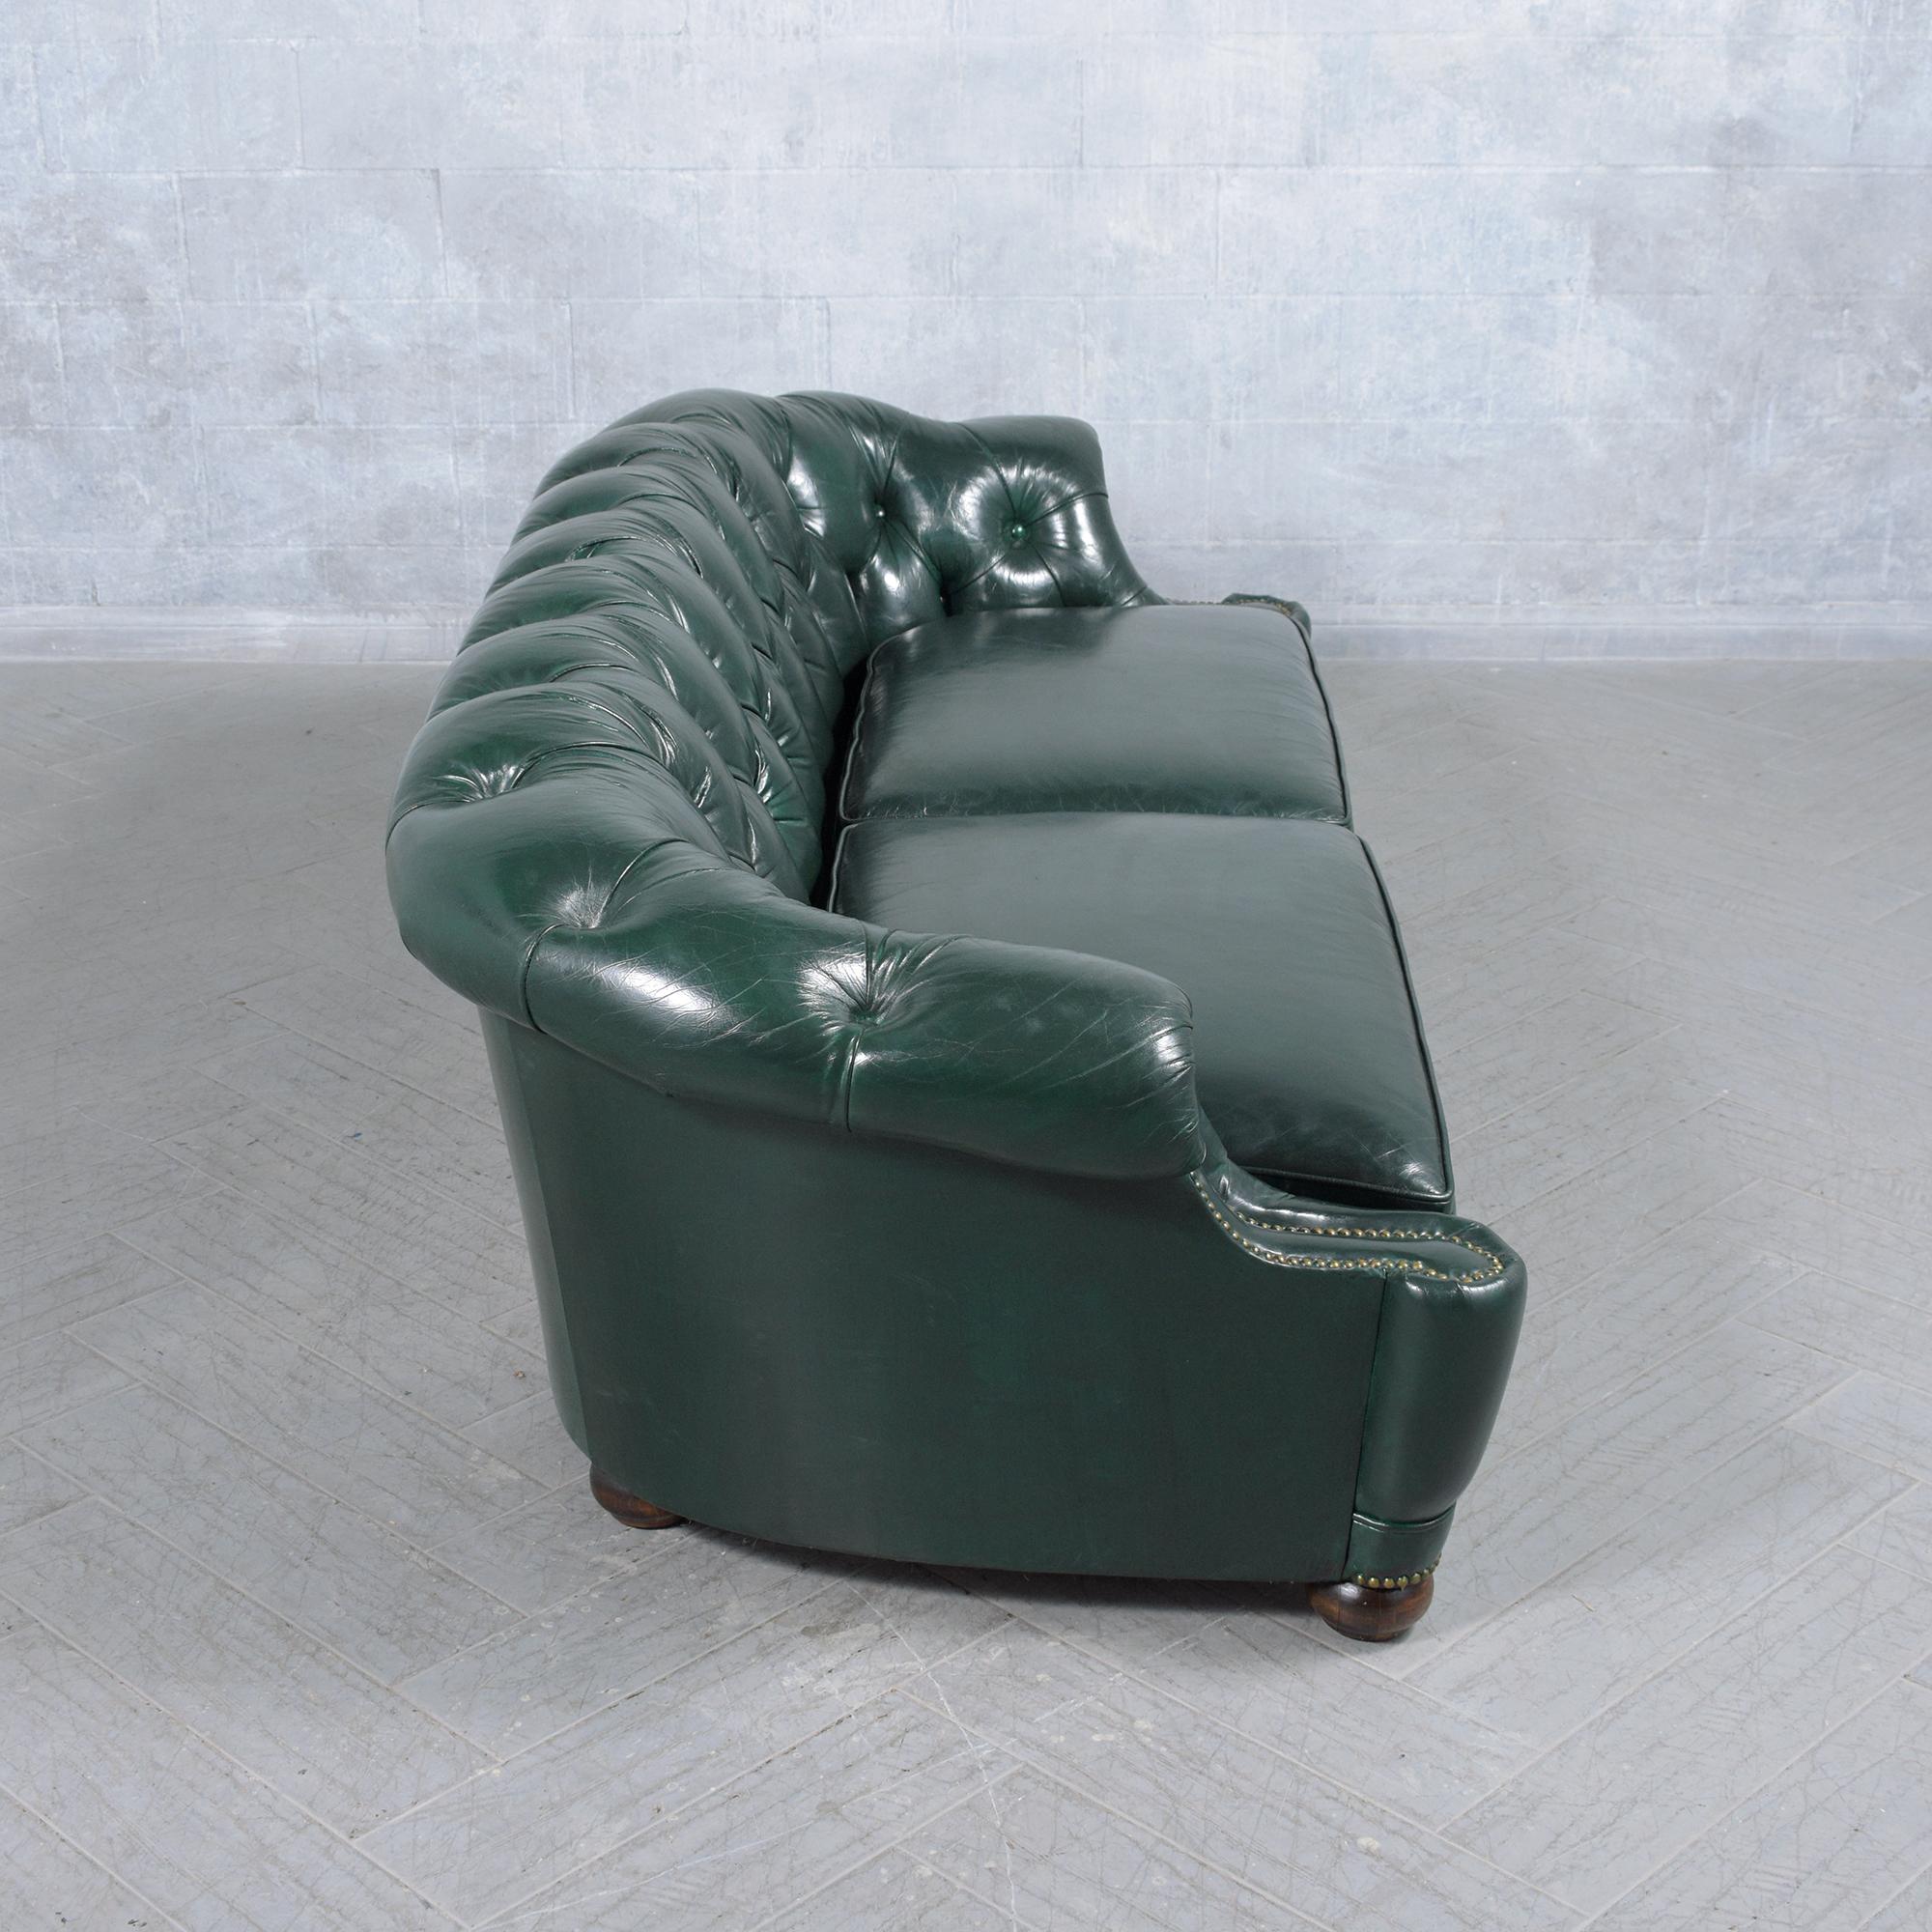 Refurbished 1970s Emerald Green Italian Chesterfield Sofa - Vintage Elegance 5